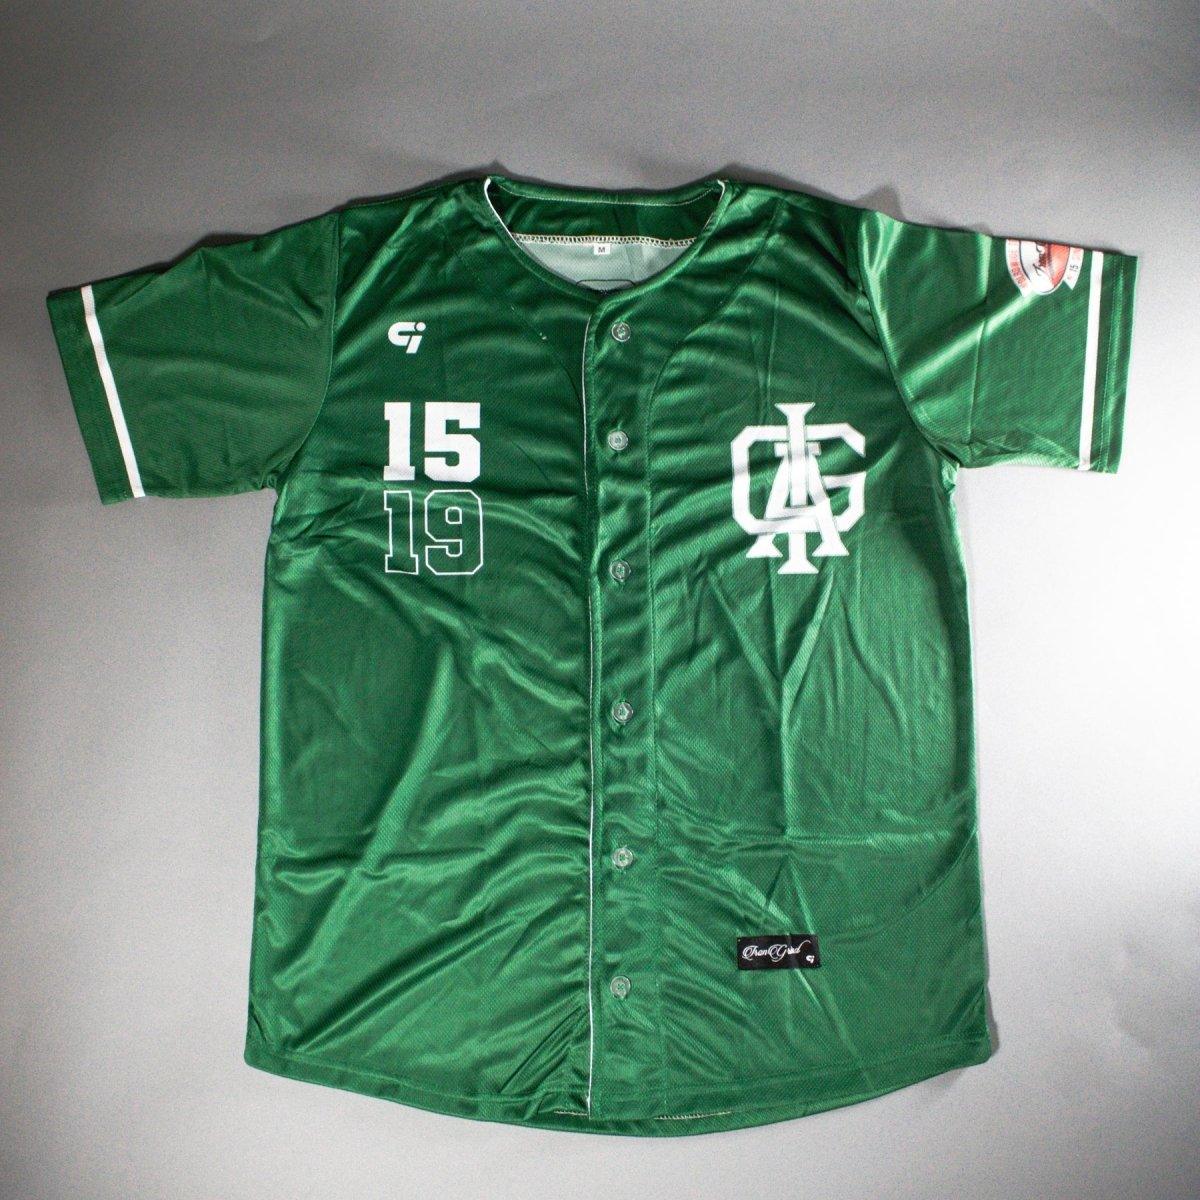 Incarnate Baseball Jersey - Green - IronGrind Athletics - activewear - gymshark - alphalete